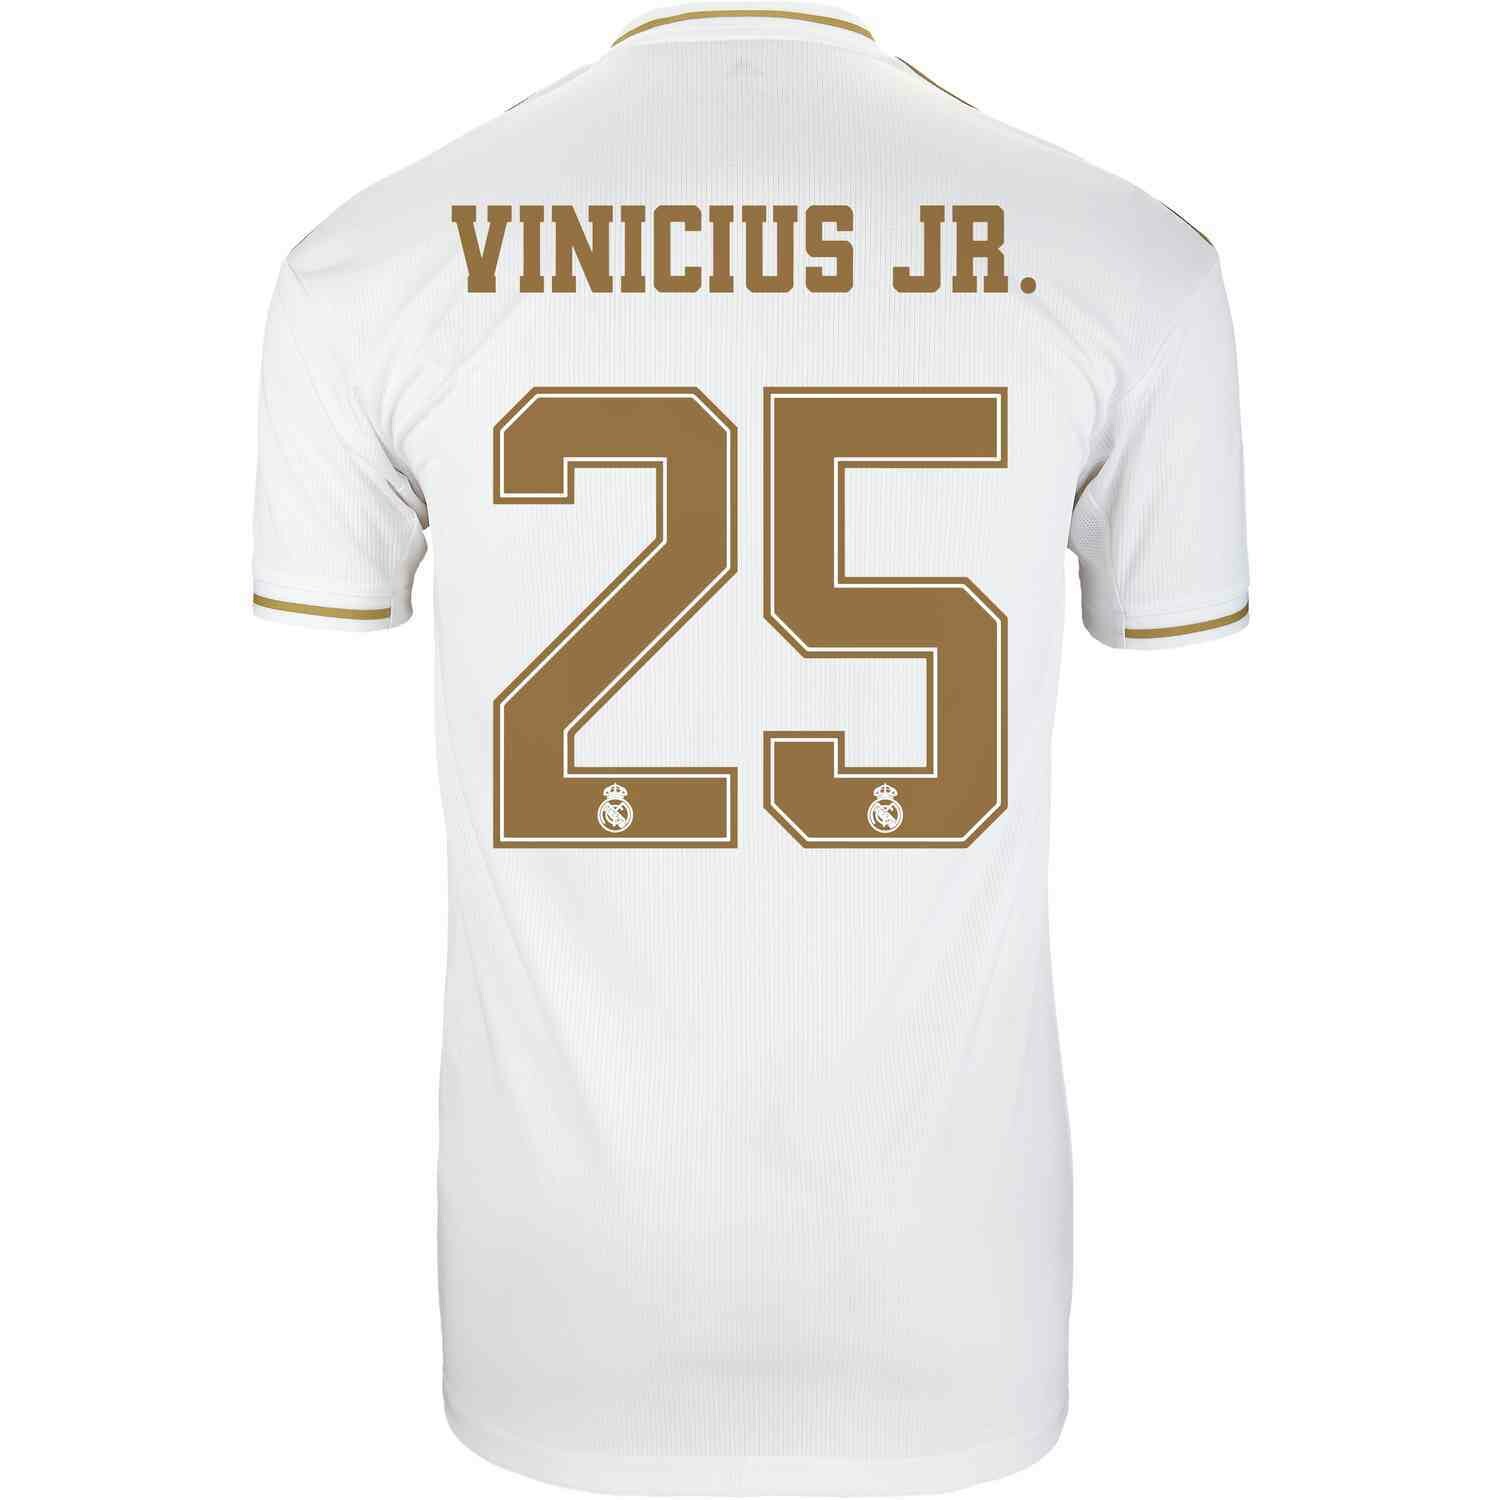 Adidas Real Madrid Vinicius Jr. Jersey 19/20